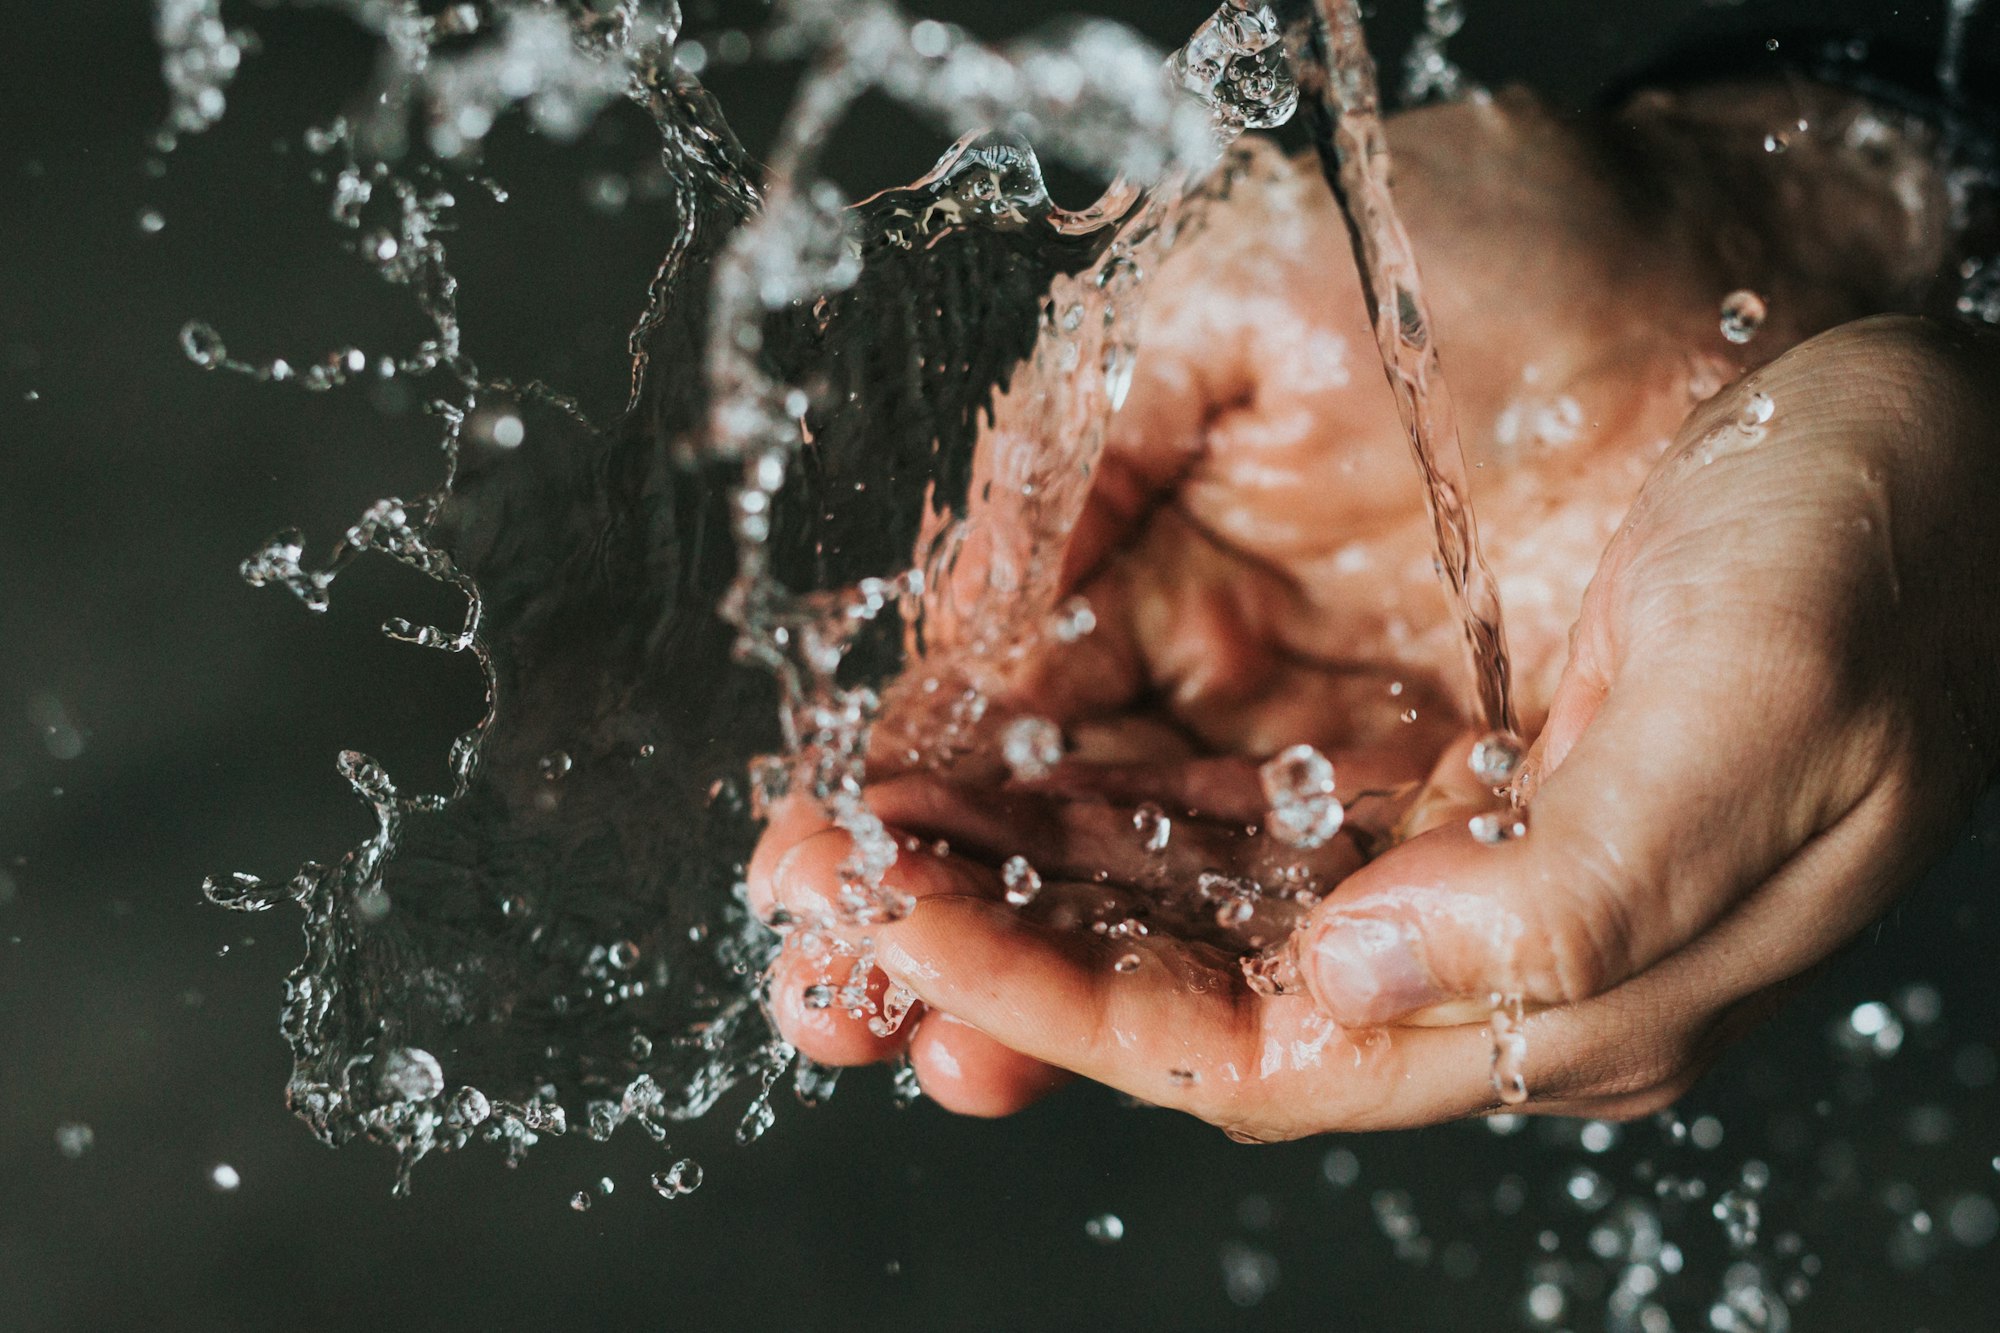 Does 'Soap Free' Handwash Kill Germs?